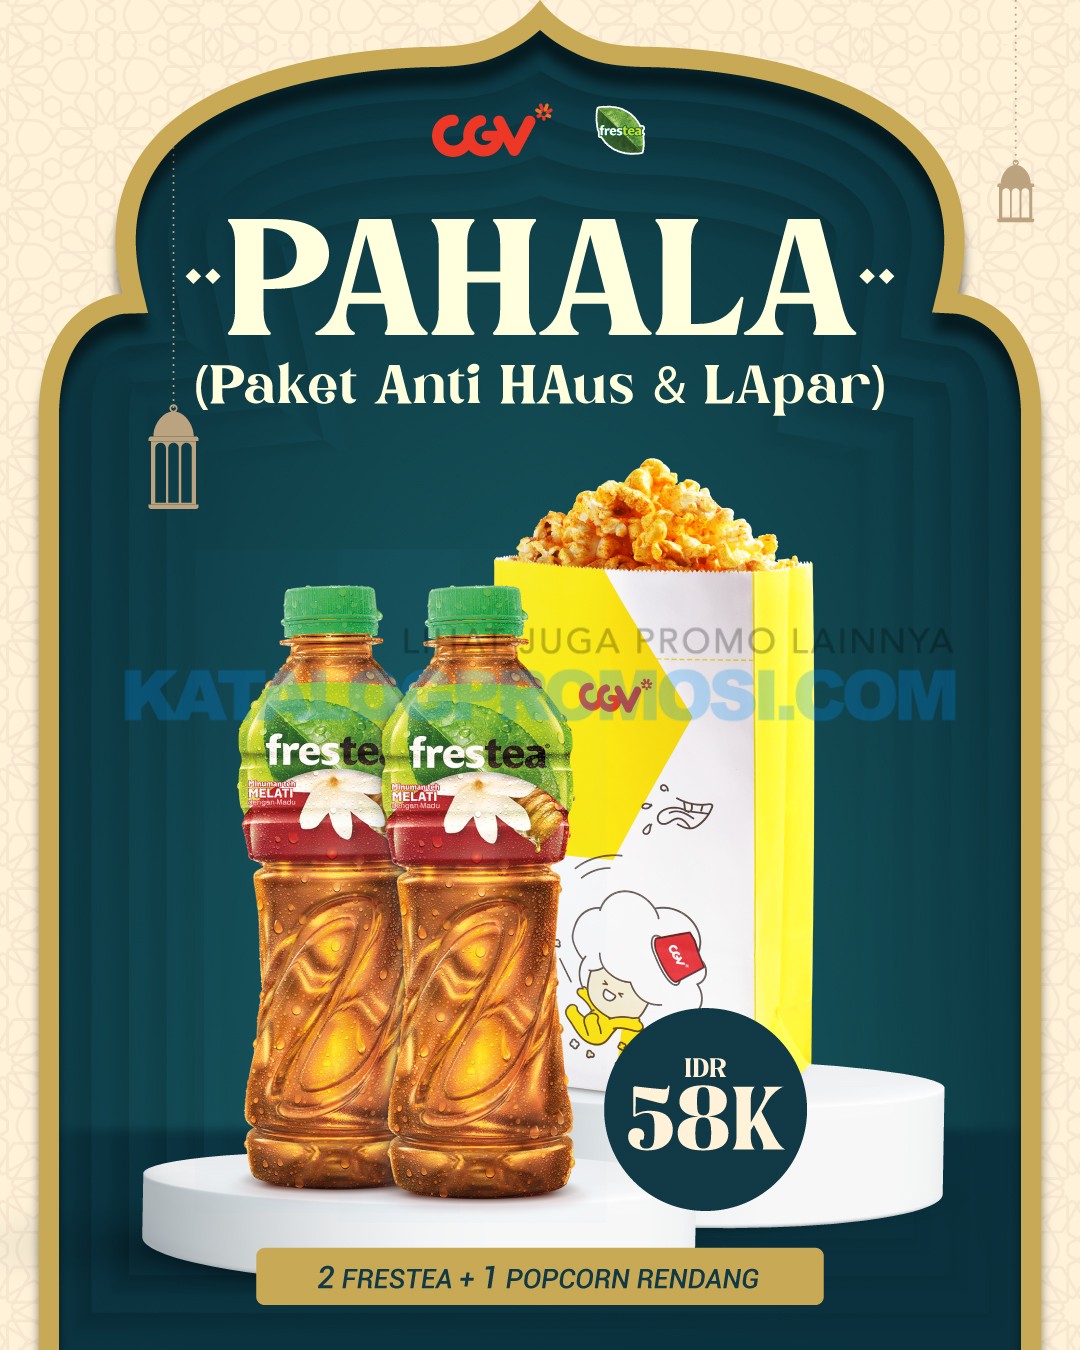 Promo CGV CINEMA PAKET COMBO PAHALA (Paket Anti Haus dan Lapar).